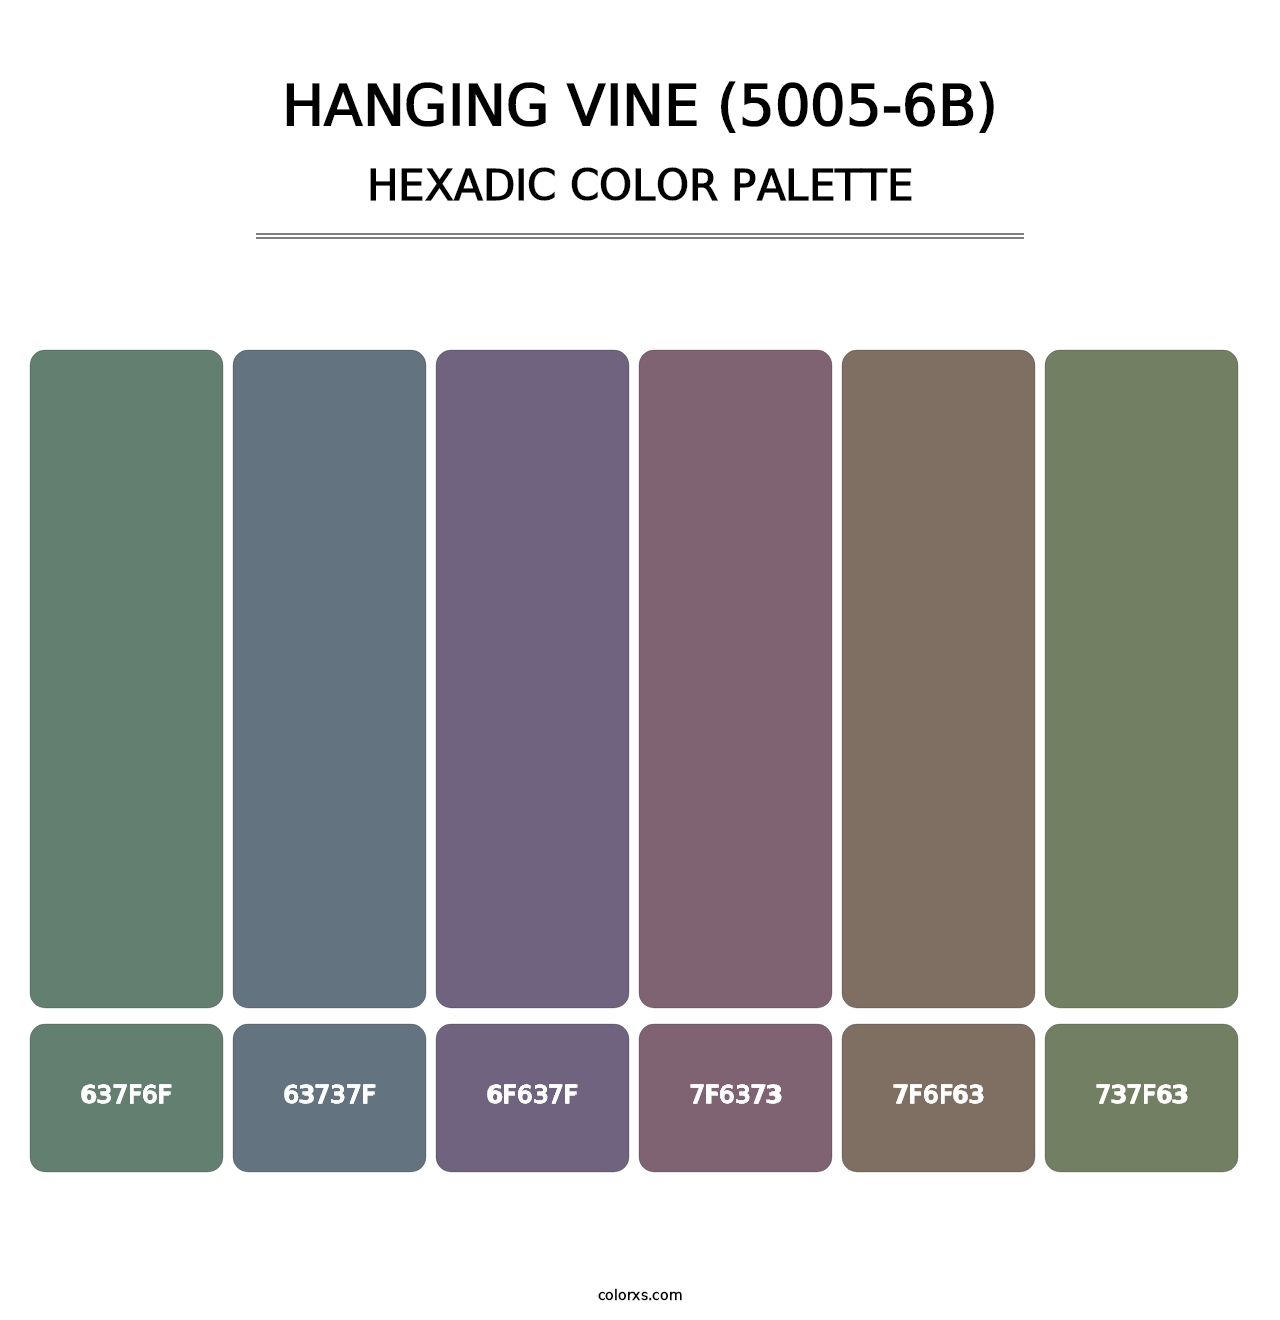 Hanging Vine (5005-6B) - Hexadic Color Palette